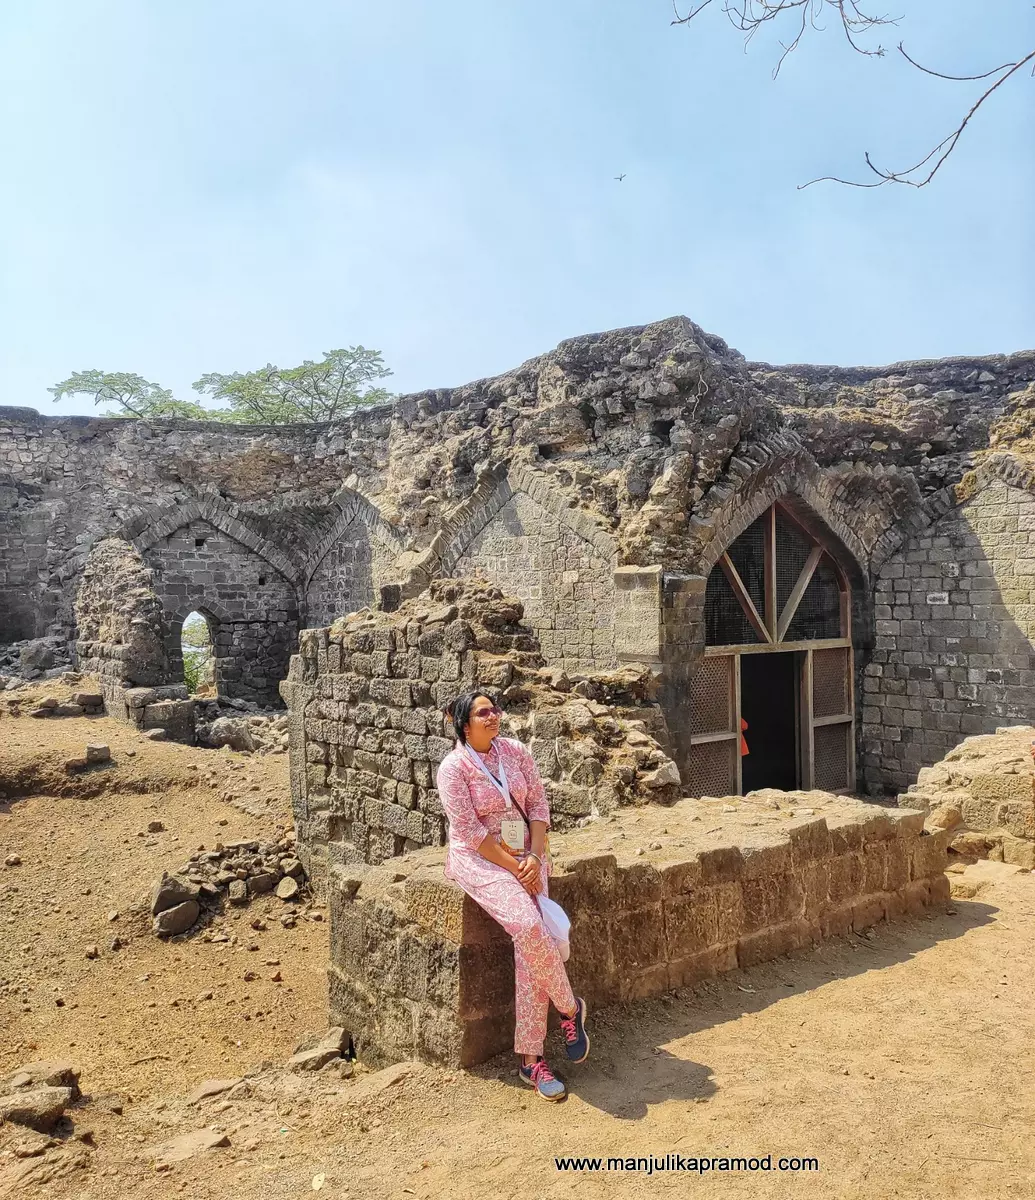 Hiking the Shivneri Fort in Junnar during Hindavi Swaraj Mahotsav